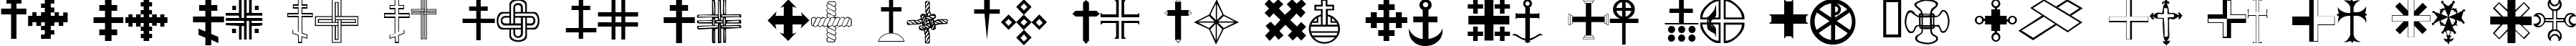 Пример написания английского алфавита шрифтом Christian Crosses III